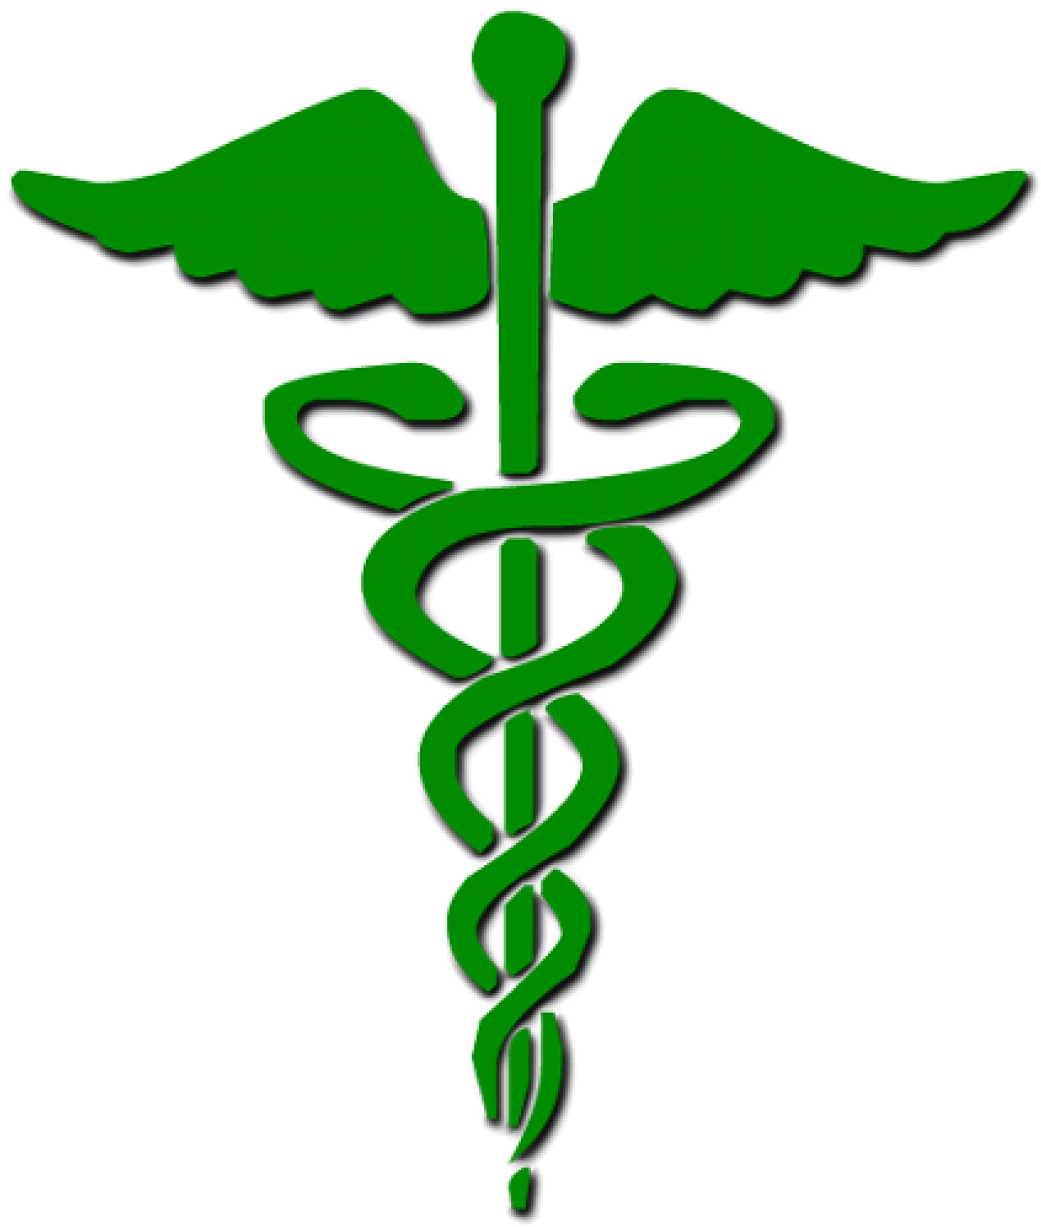 Dr - N - G - J - Prasanna Jayalath - Green Medical Symbol (1260x1260), Png Download